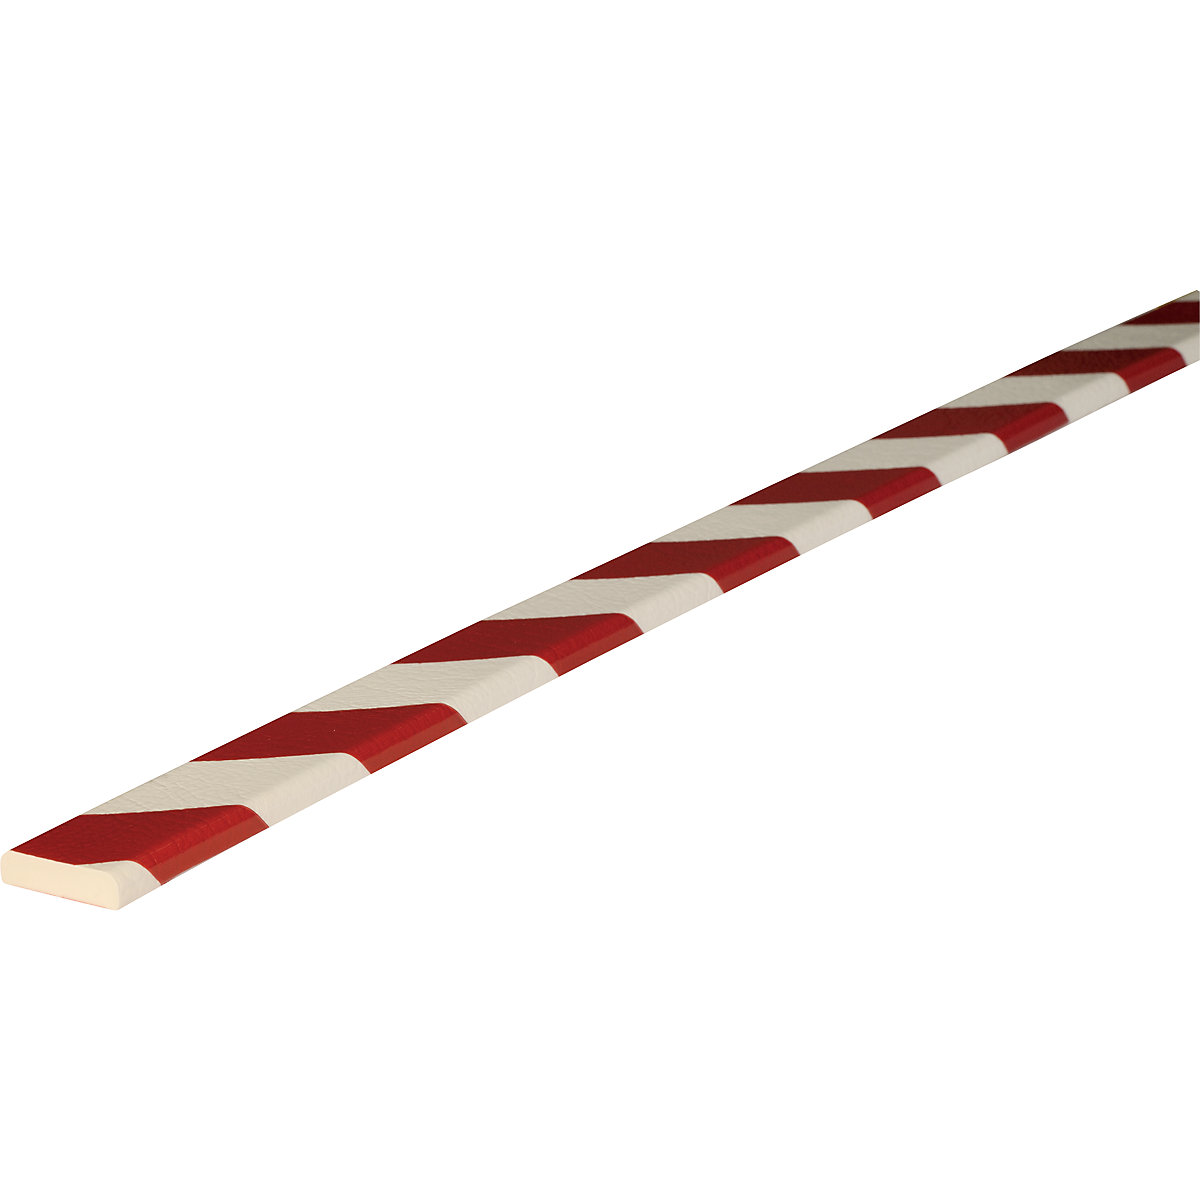 Knuffi®-oppervlaktebescherming – SHG, type F, 1 rol à 5 m, rood/wit-18